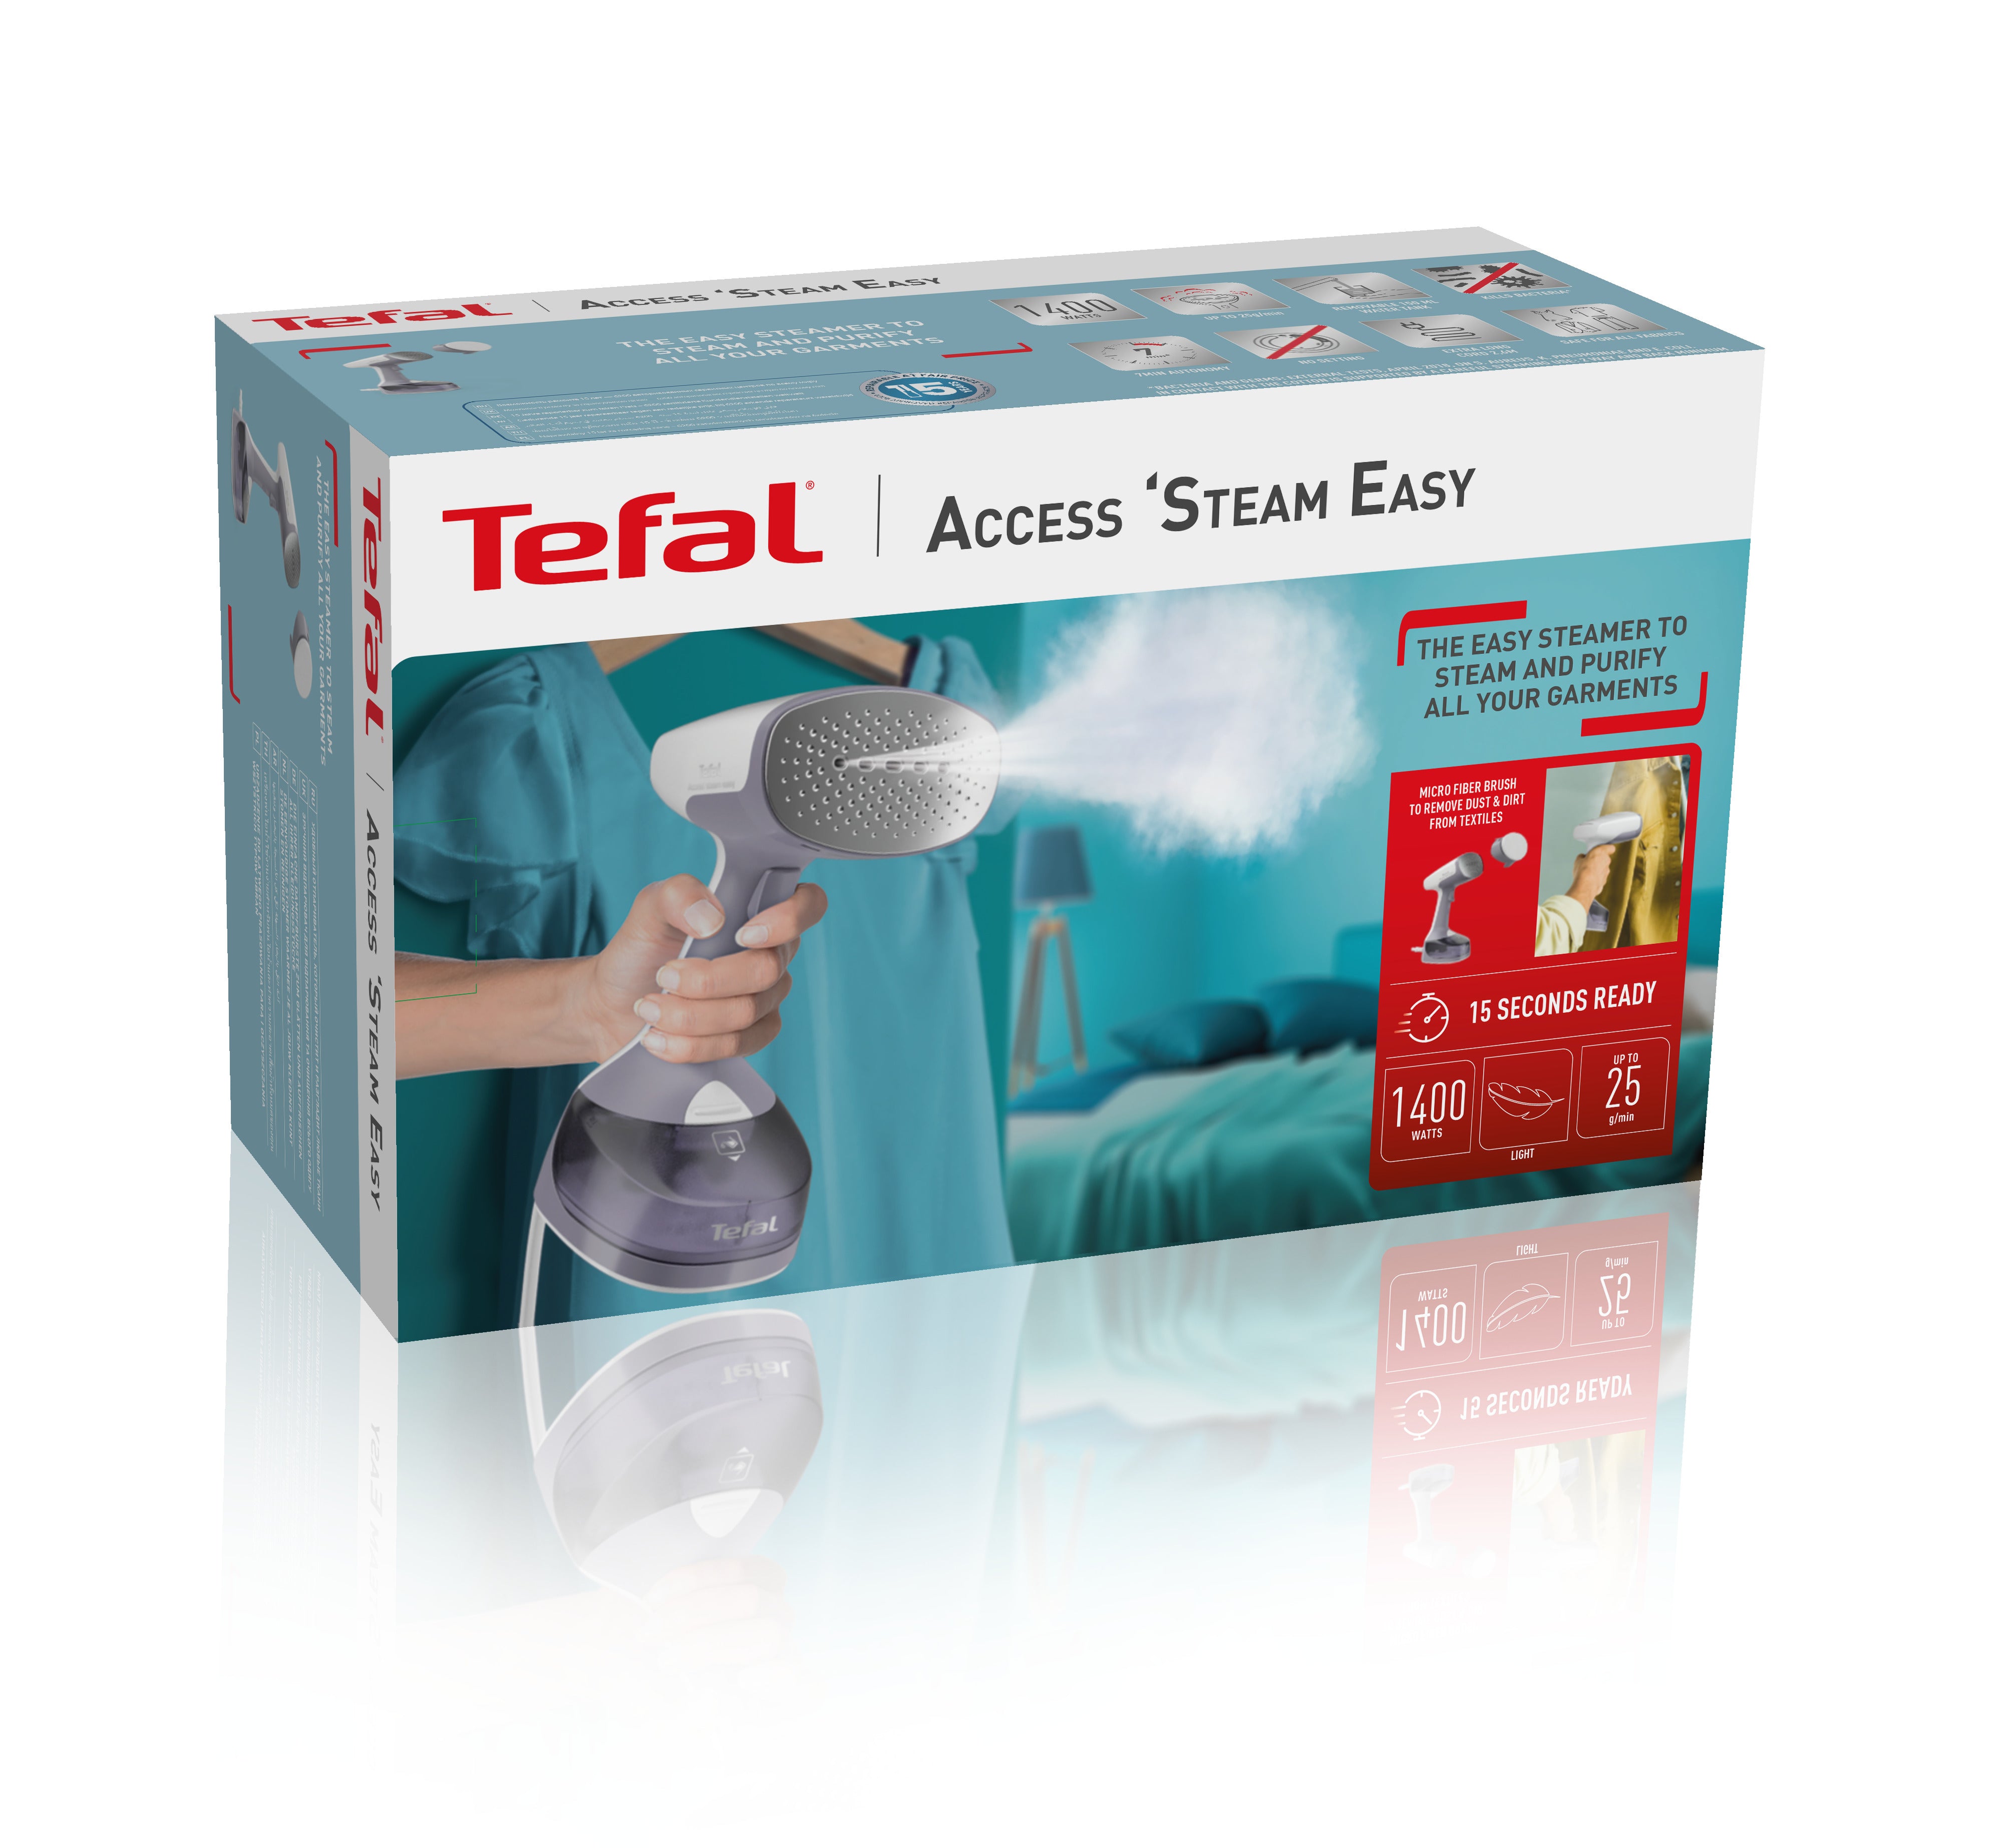 Tefal Access Steam Easy Handheld Garment Steamer DT7151